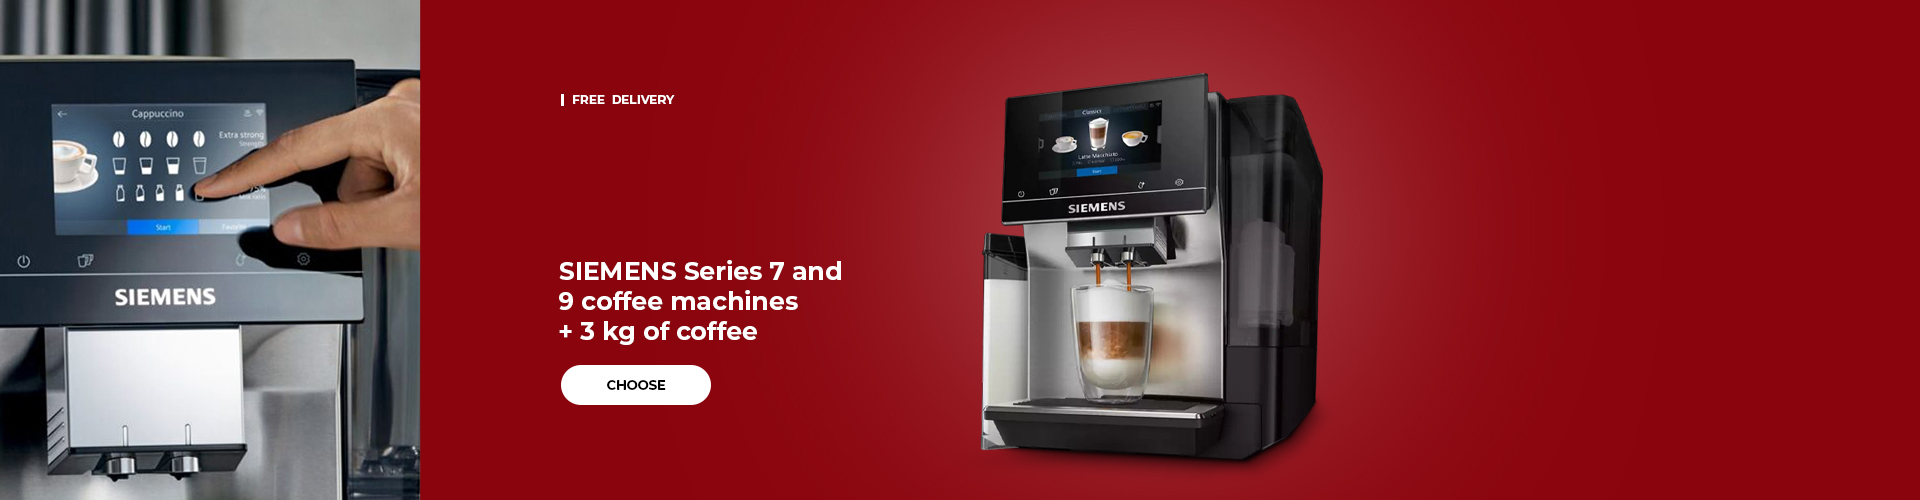 SIEMENS Series 7 and 9 coffee machines + 3 kg of coffee